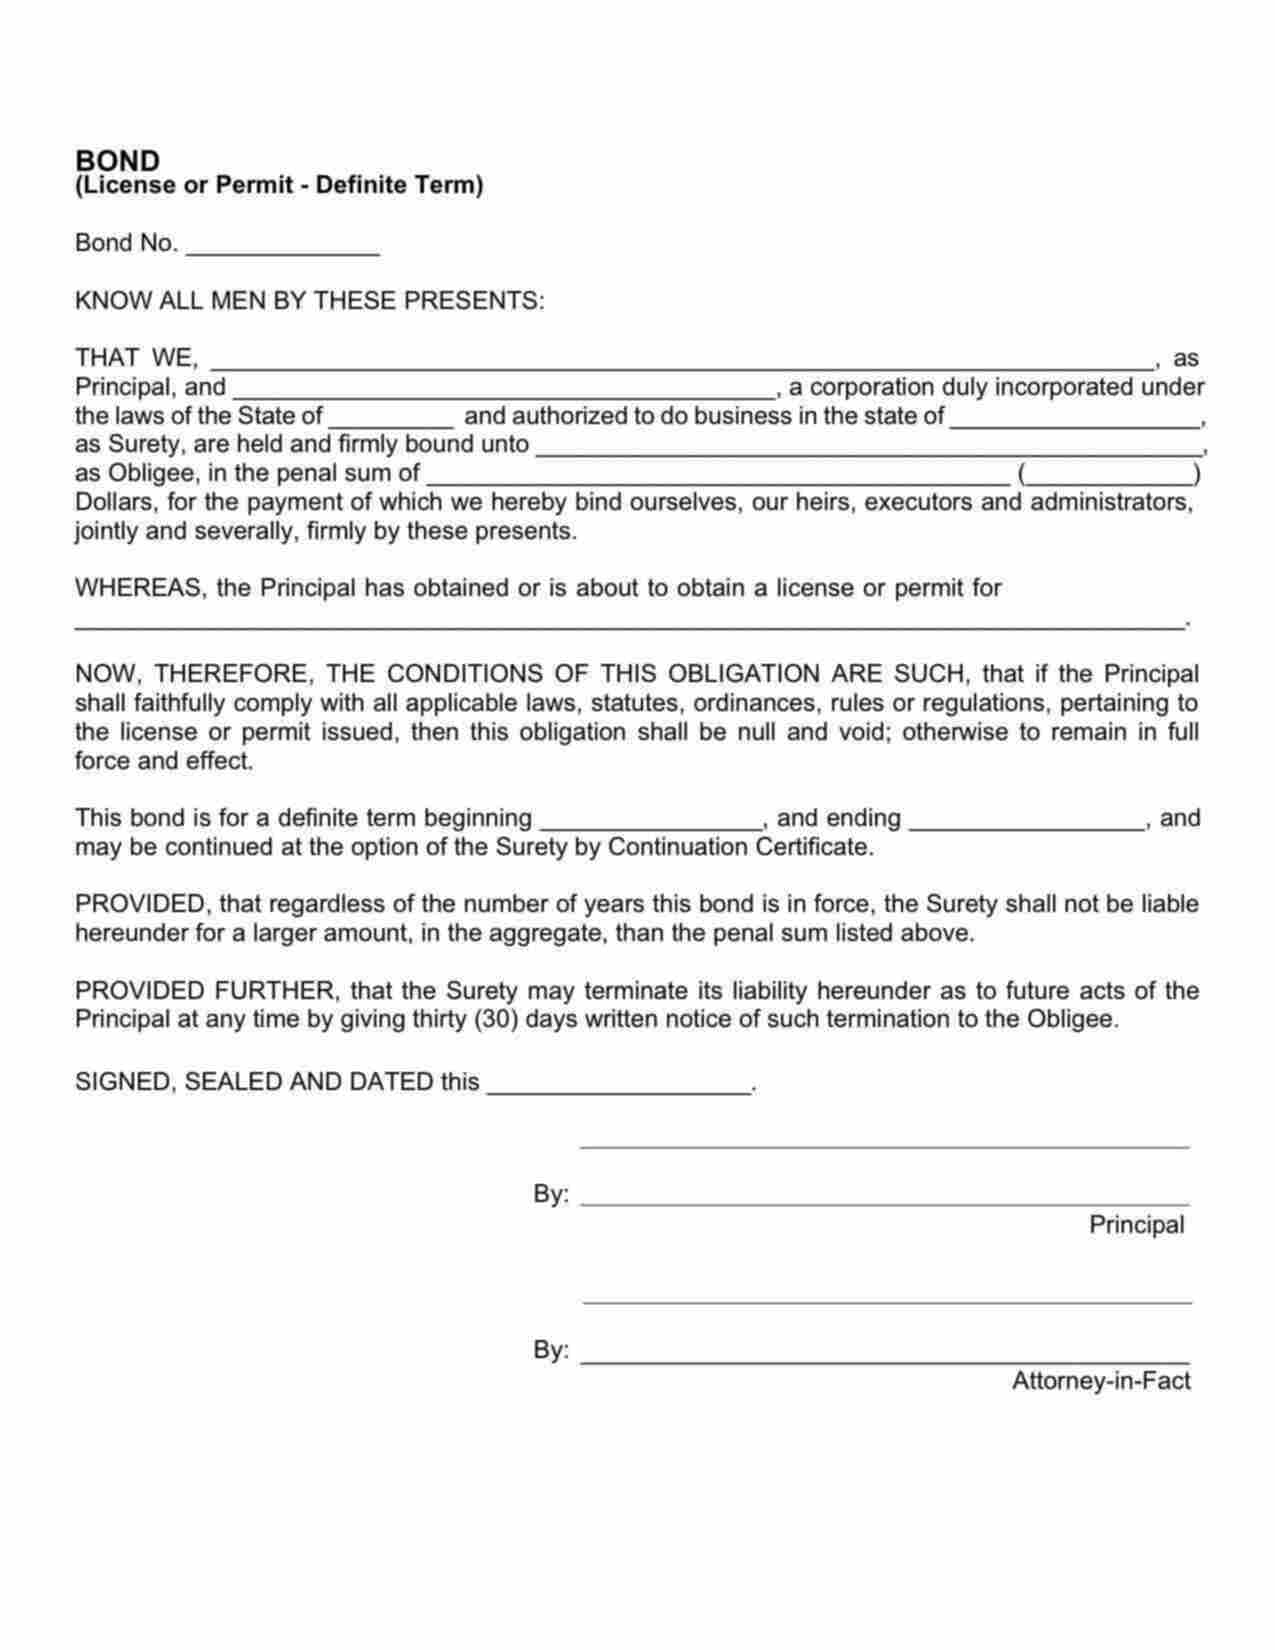 Texas License/Permit Bond Form